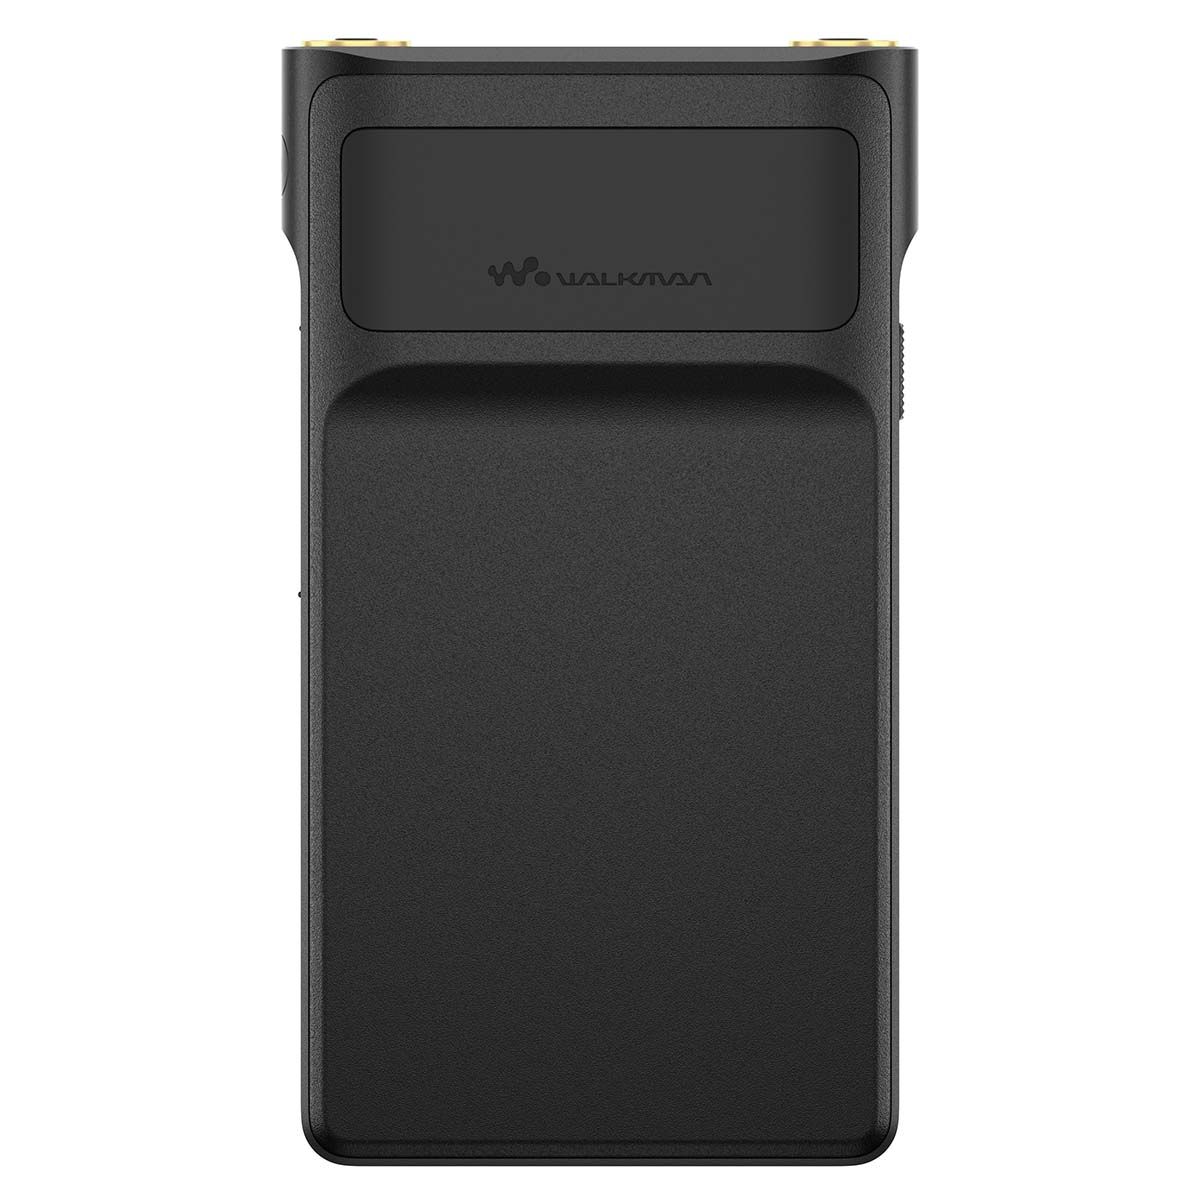 Sony WM1AM2 Walkman Digital Music Player - rear view